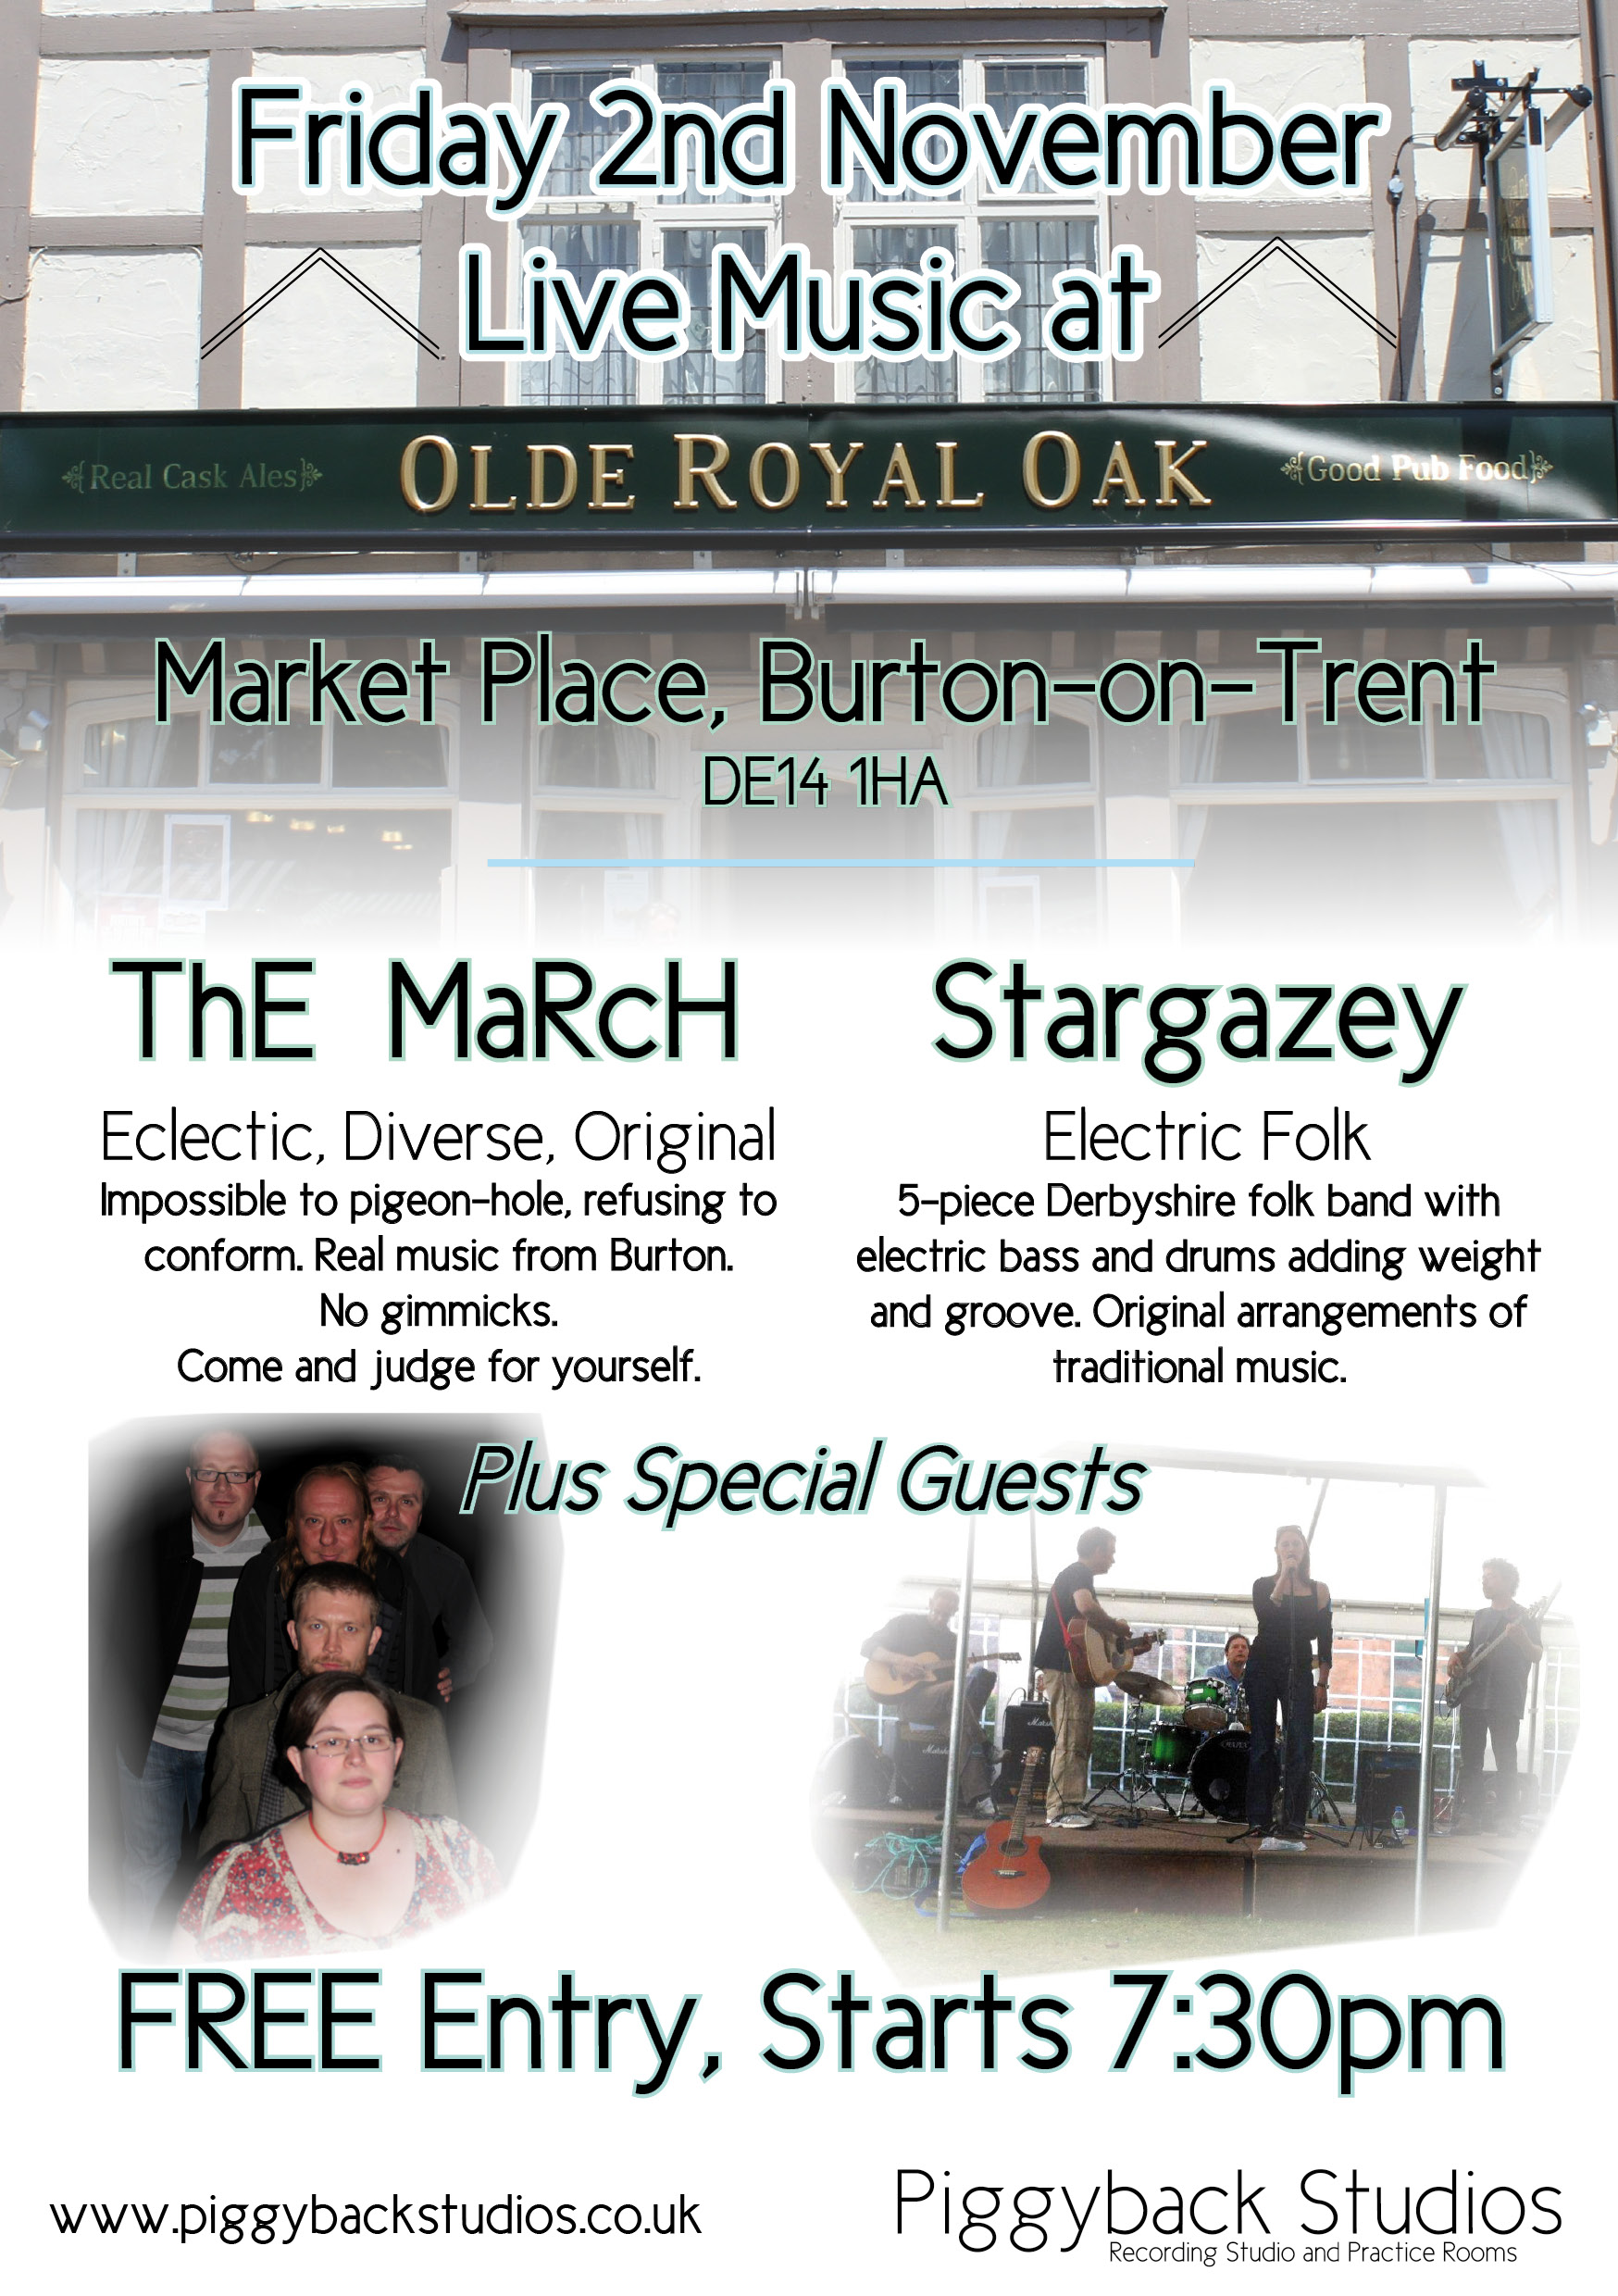 Fri 2nd Nov: The March and Stargazey at the Olde Royal Oak